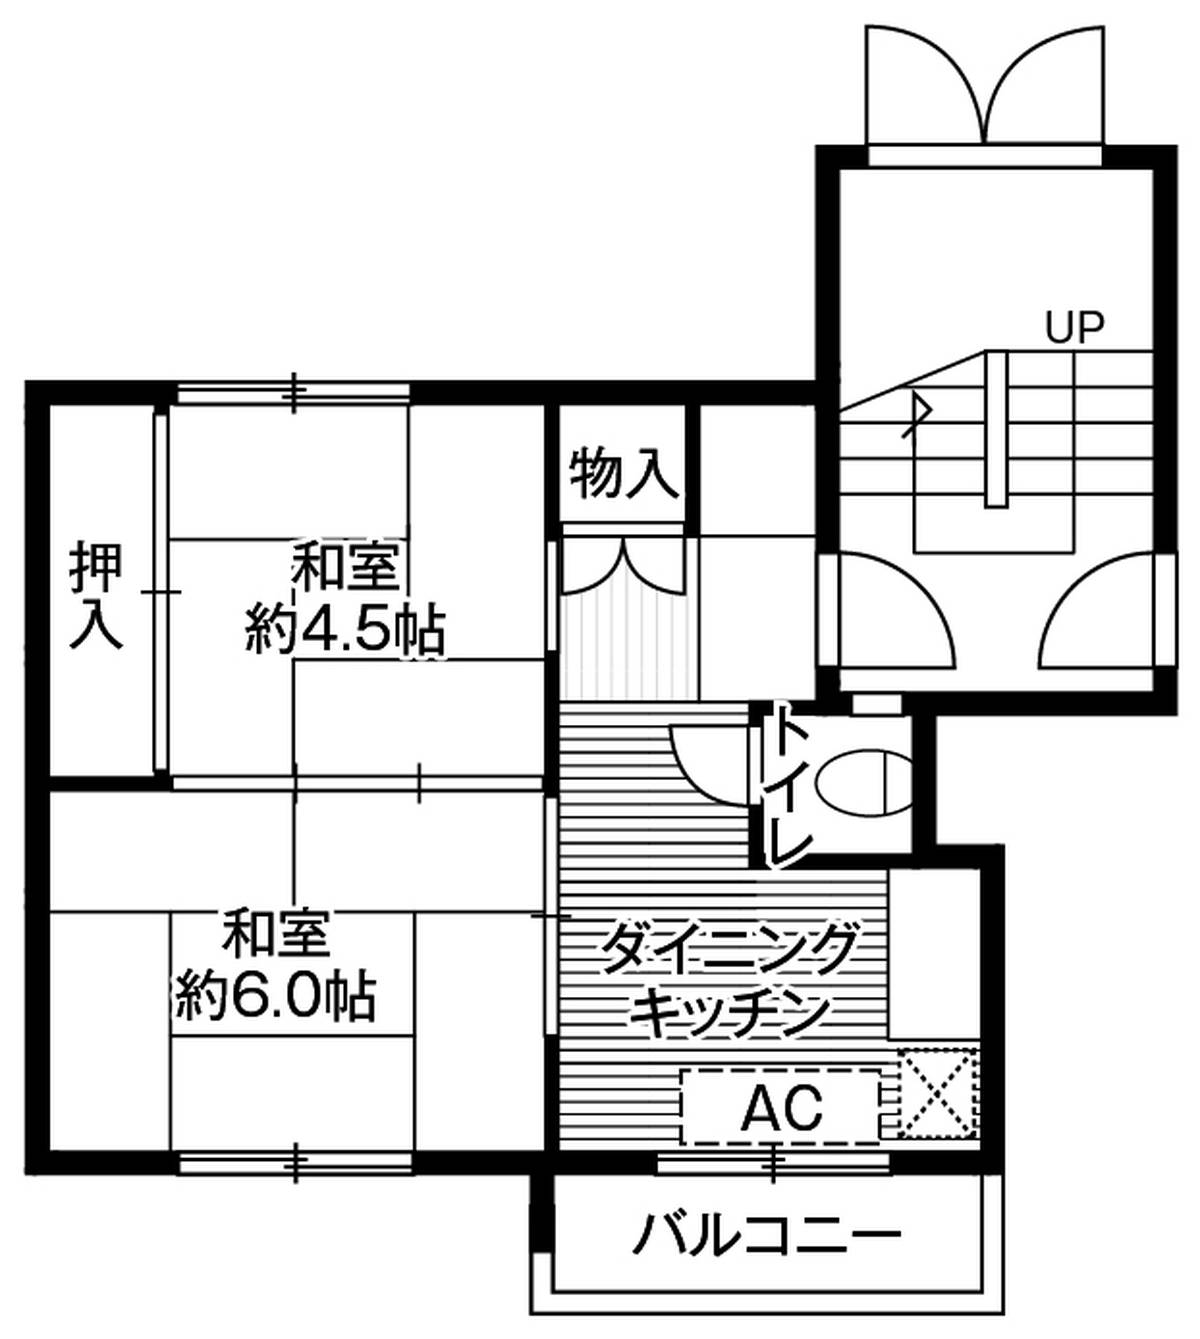 2K floorplan of Village House Yamate in Tomakomai-shi